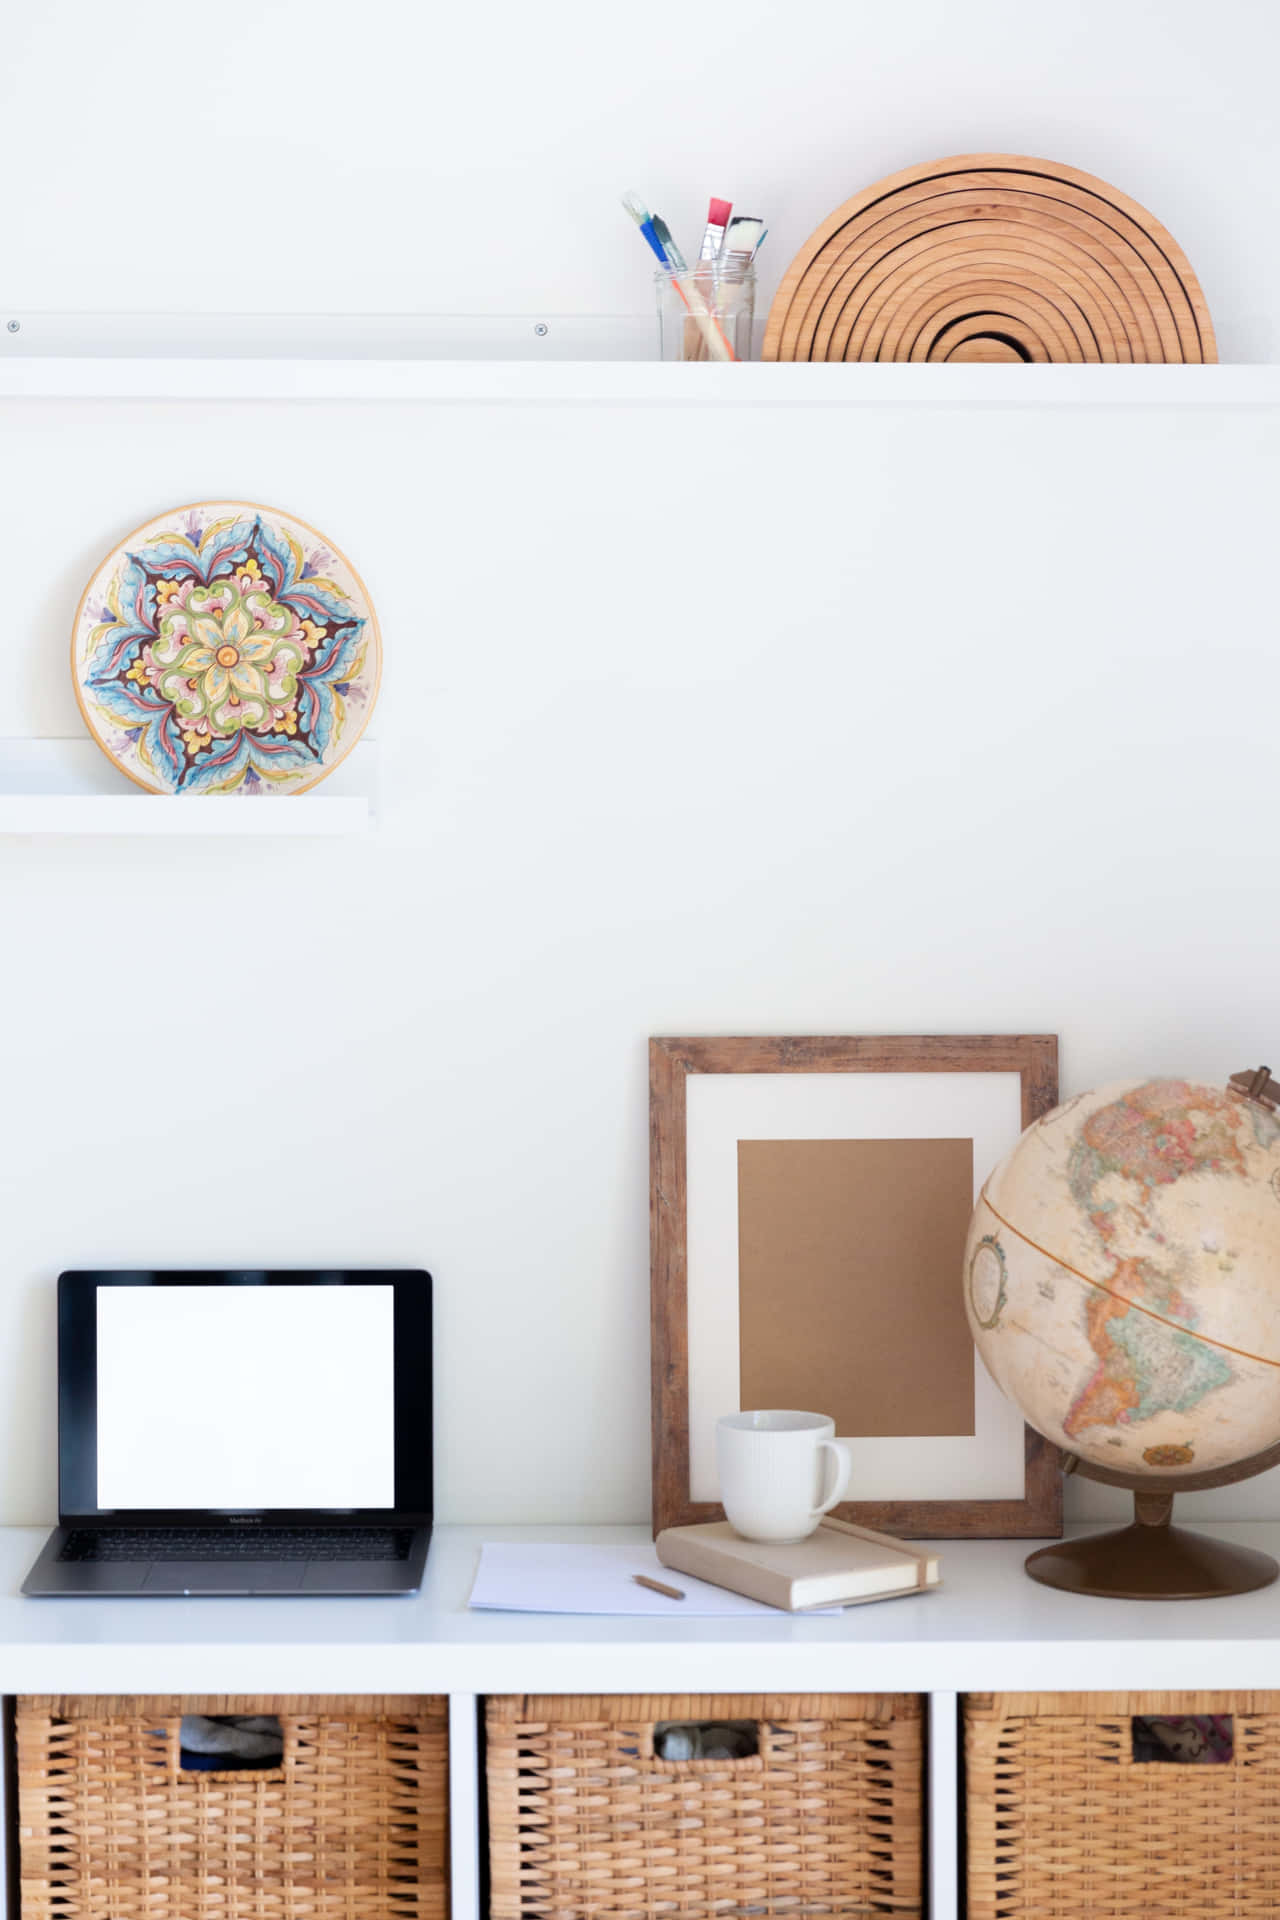 Caption: Elegant Home Office Setup In Neutral Tones